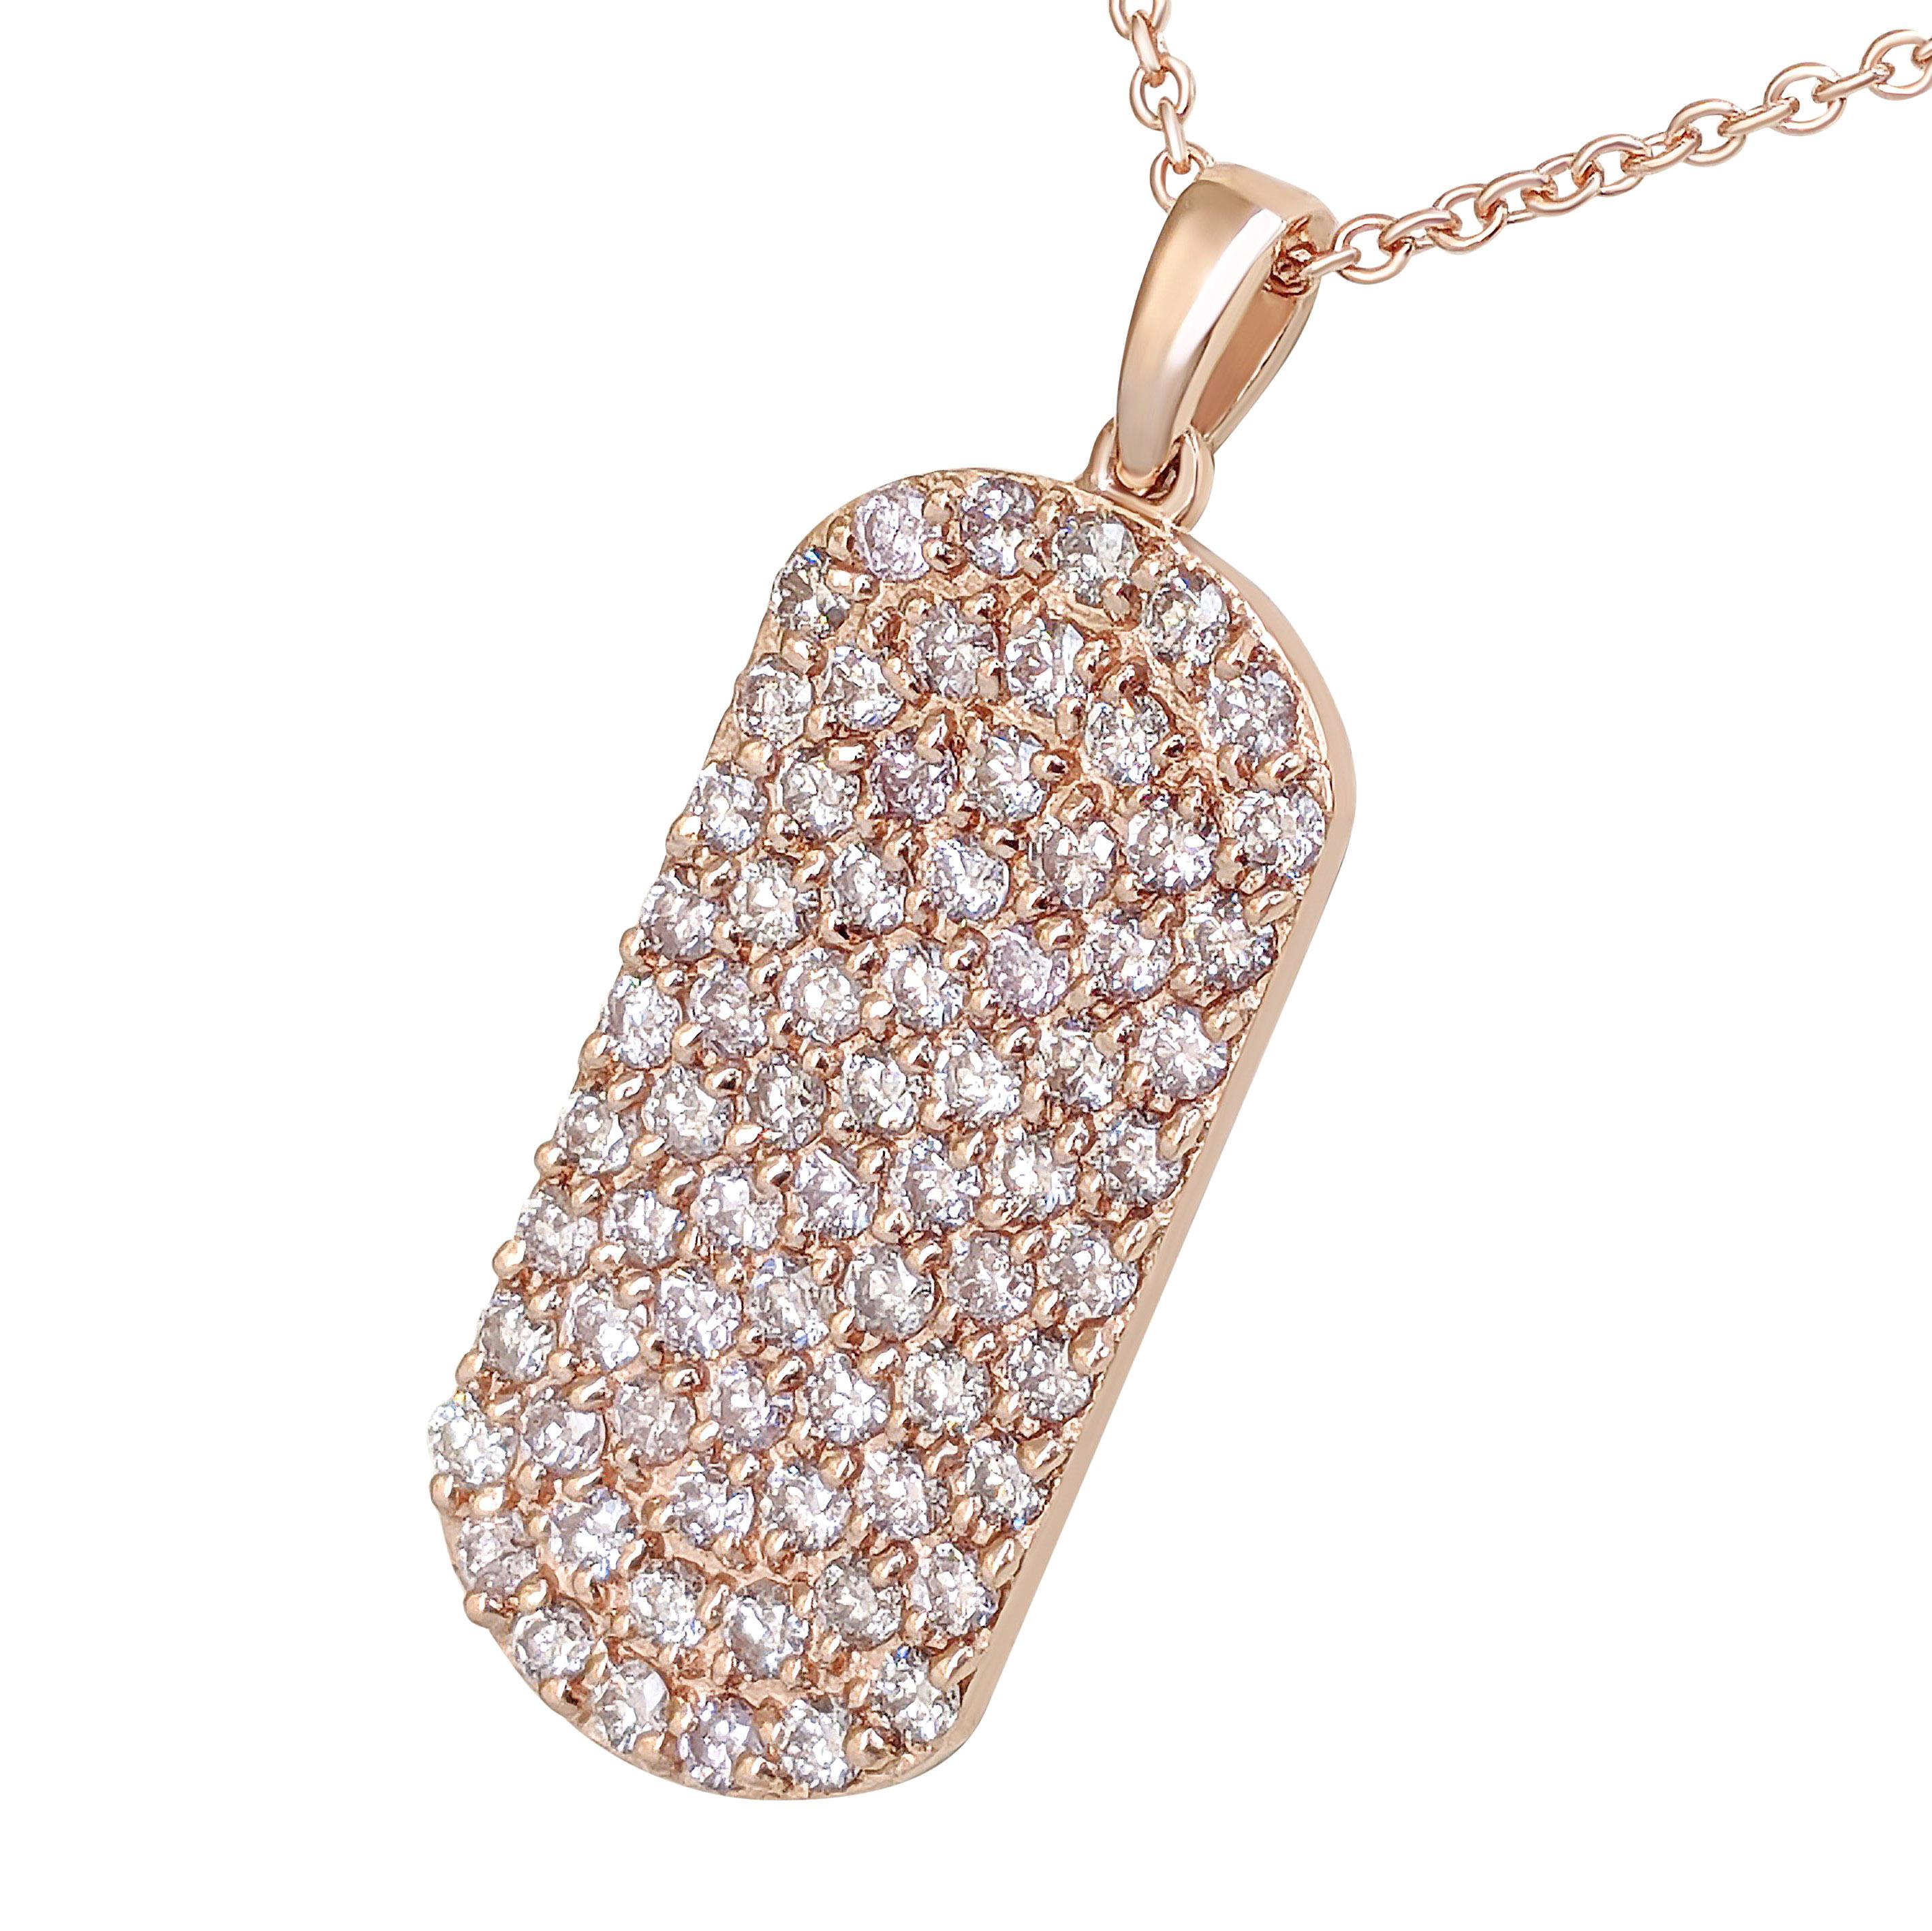 Round Cut NO RESERVE! 1.10Ct Fancy Pink Diamond 14 kt. Gold Pendant Necklace